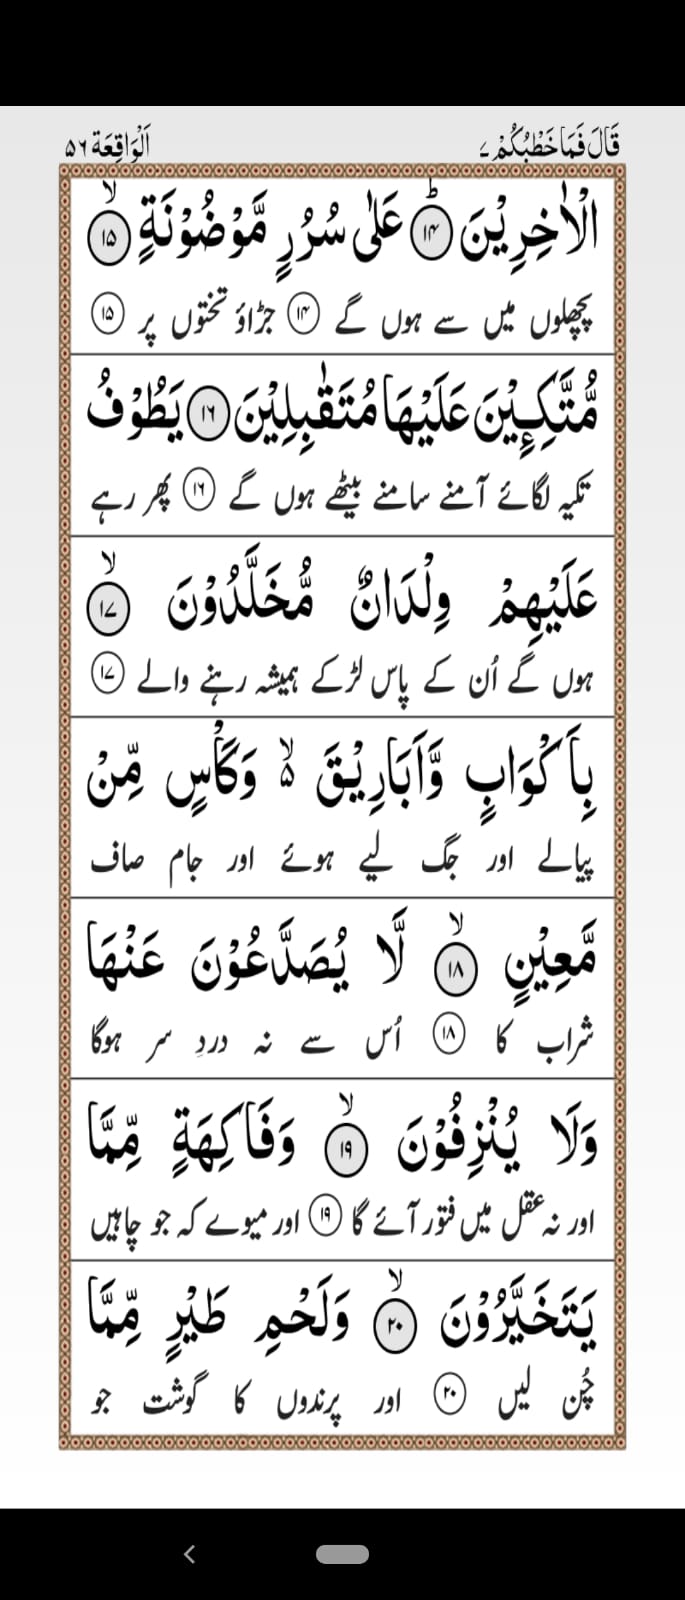 Surah Waqiah with Urdu Translation Page 3